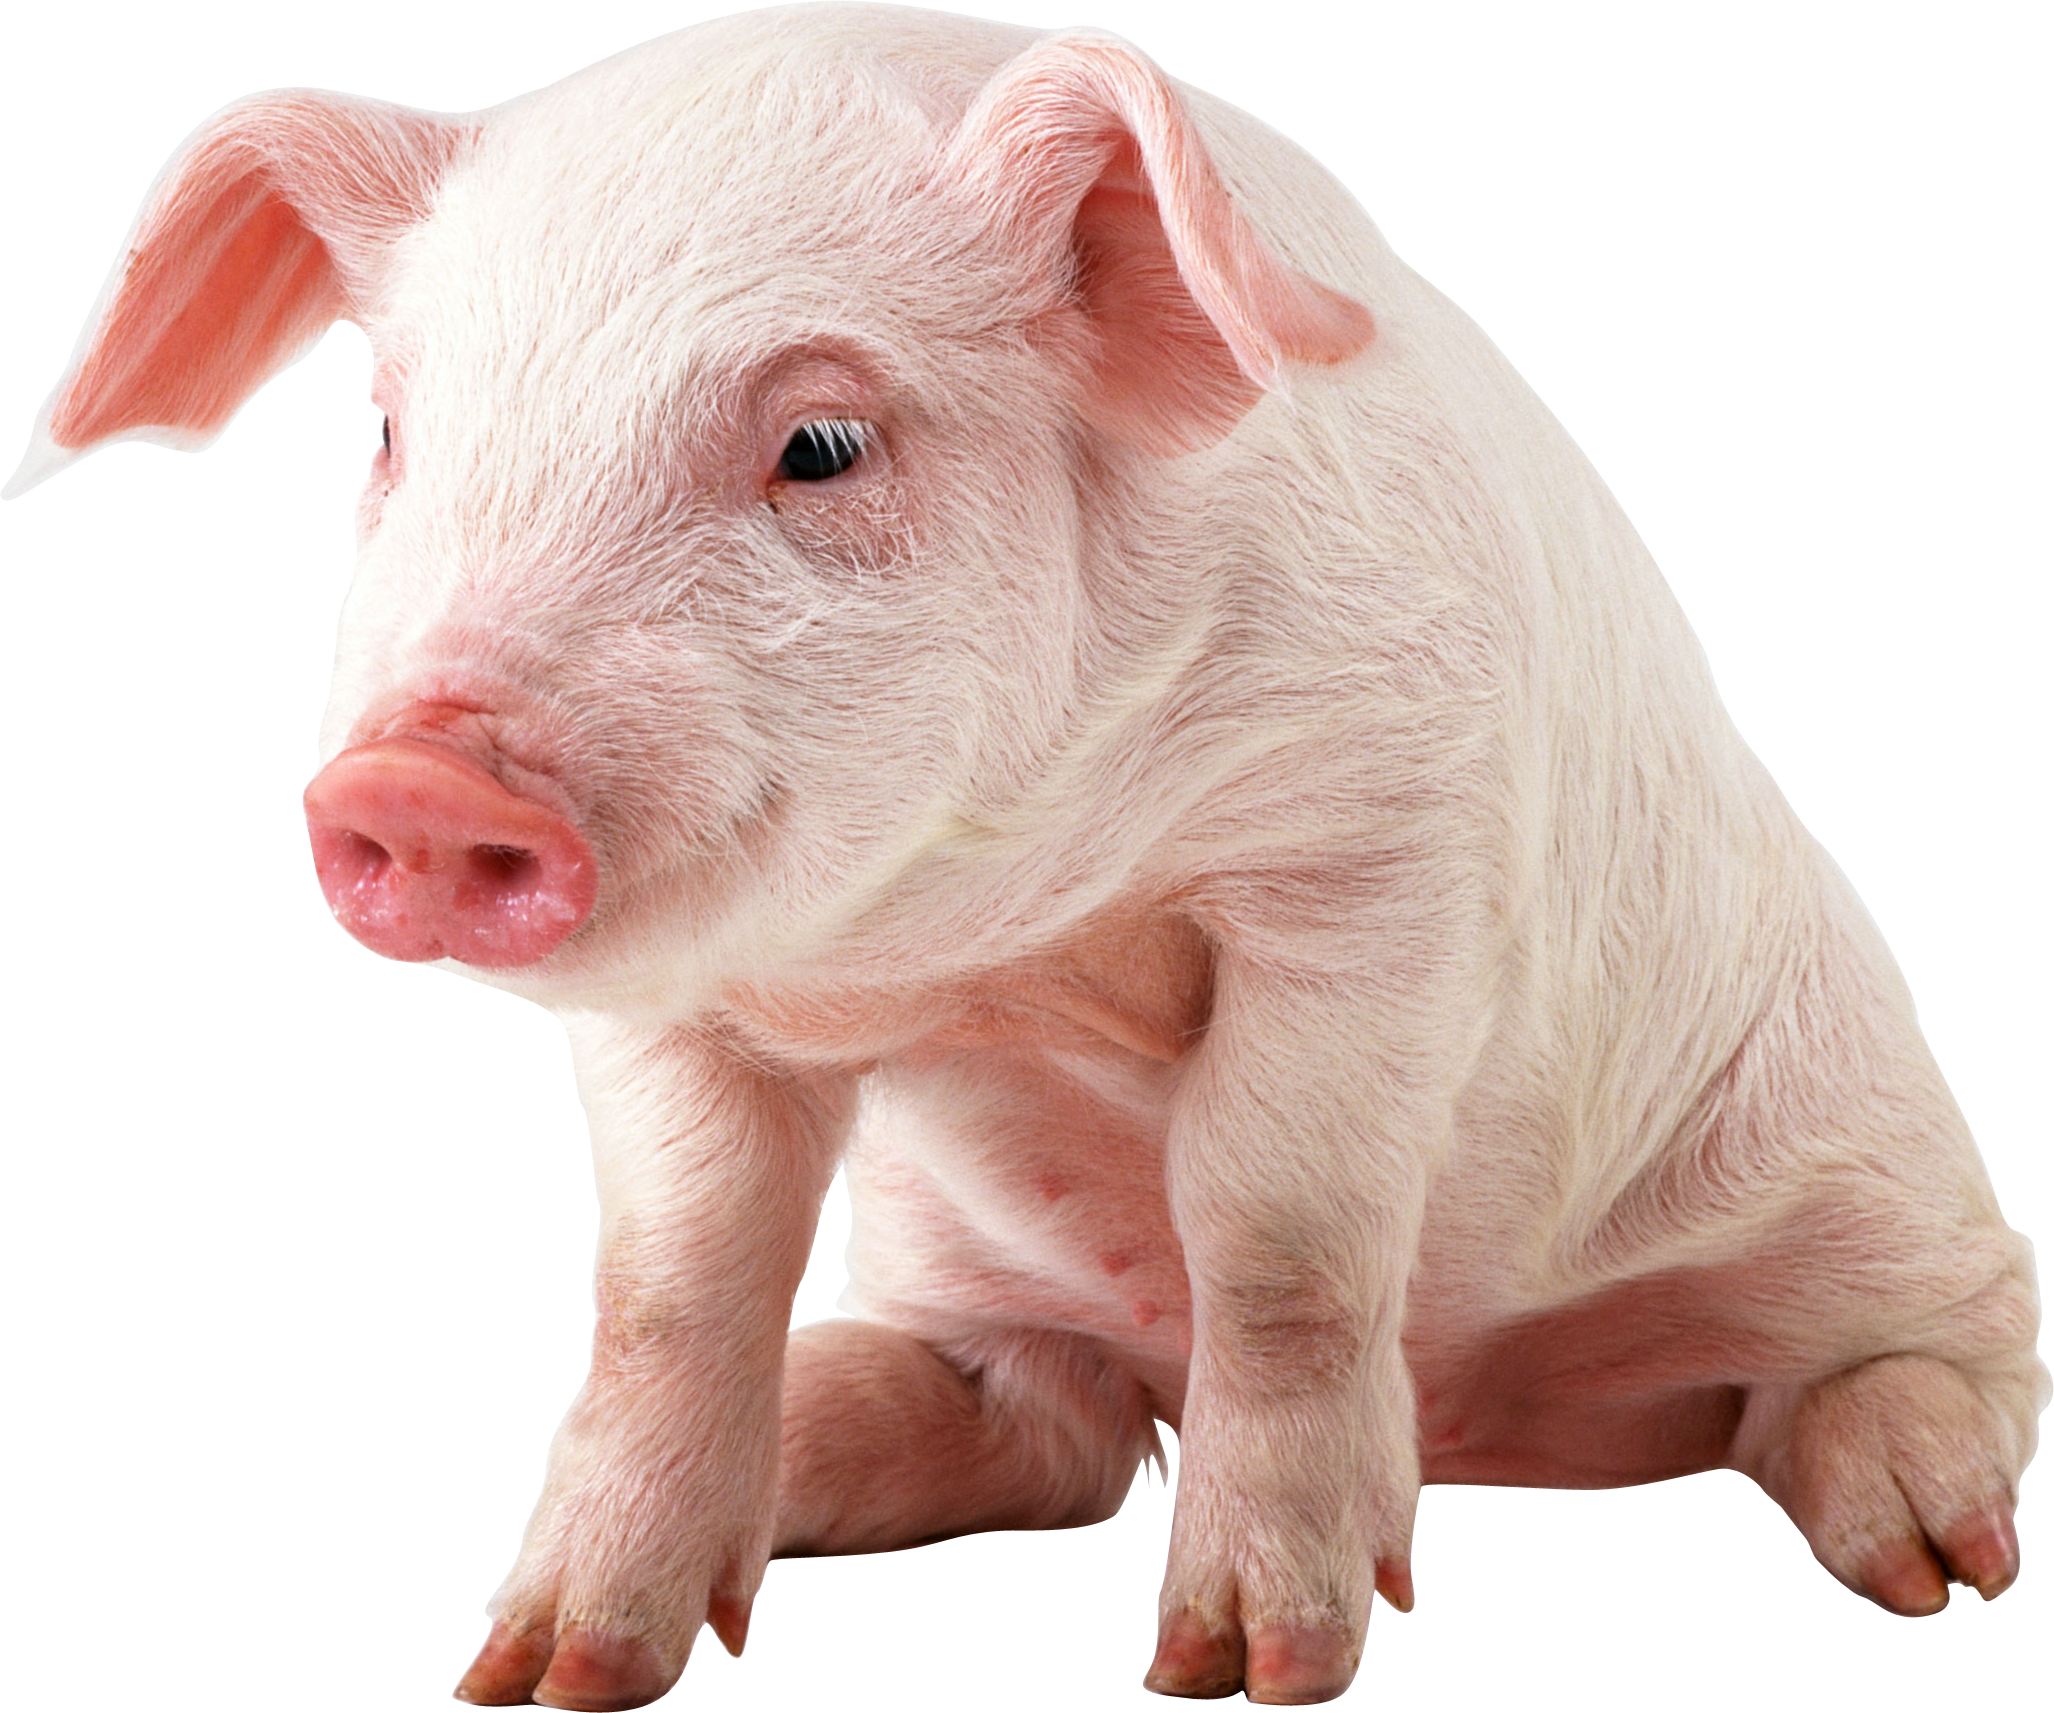 Pig Png Image - Pig, Transparent background PNG HD thumbnail